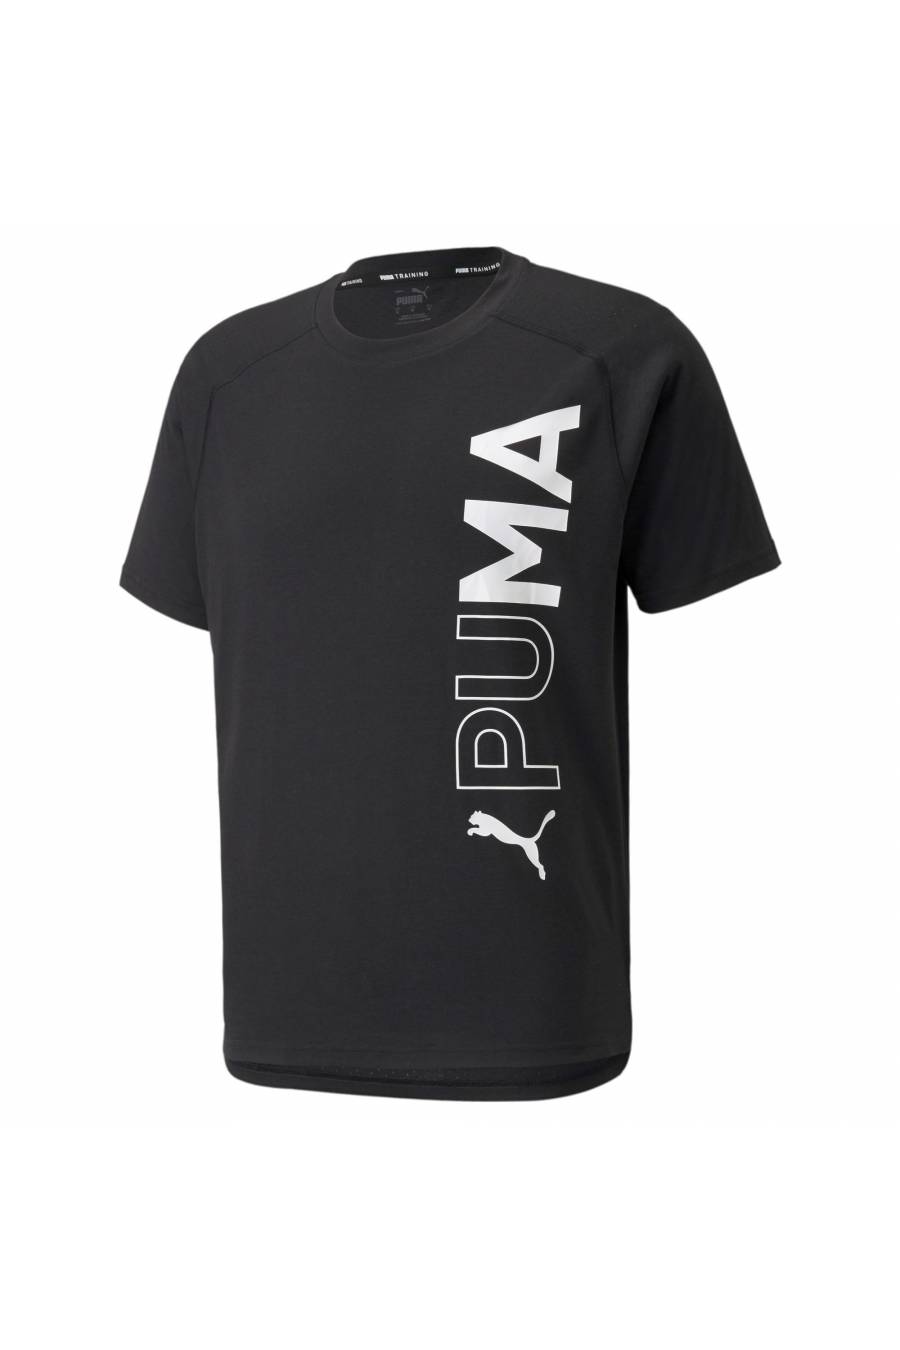 Camiseta Puma Train Puma SS - Msdsport by Masdeporte